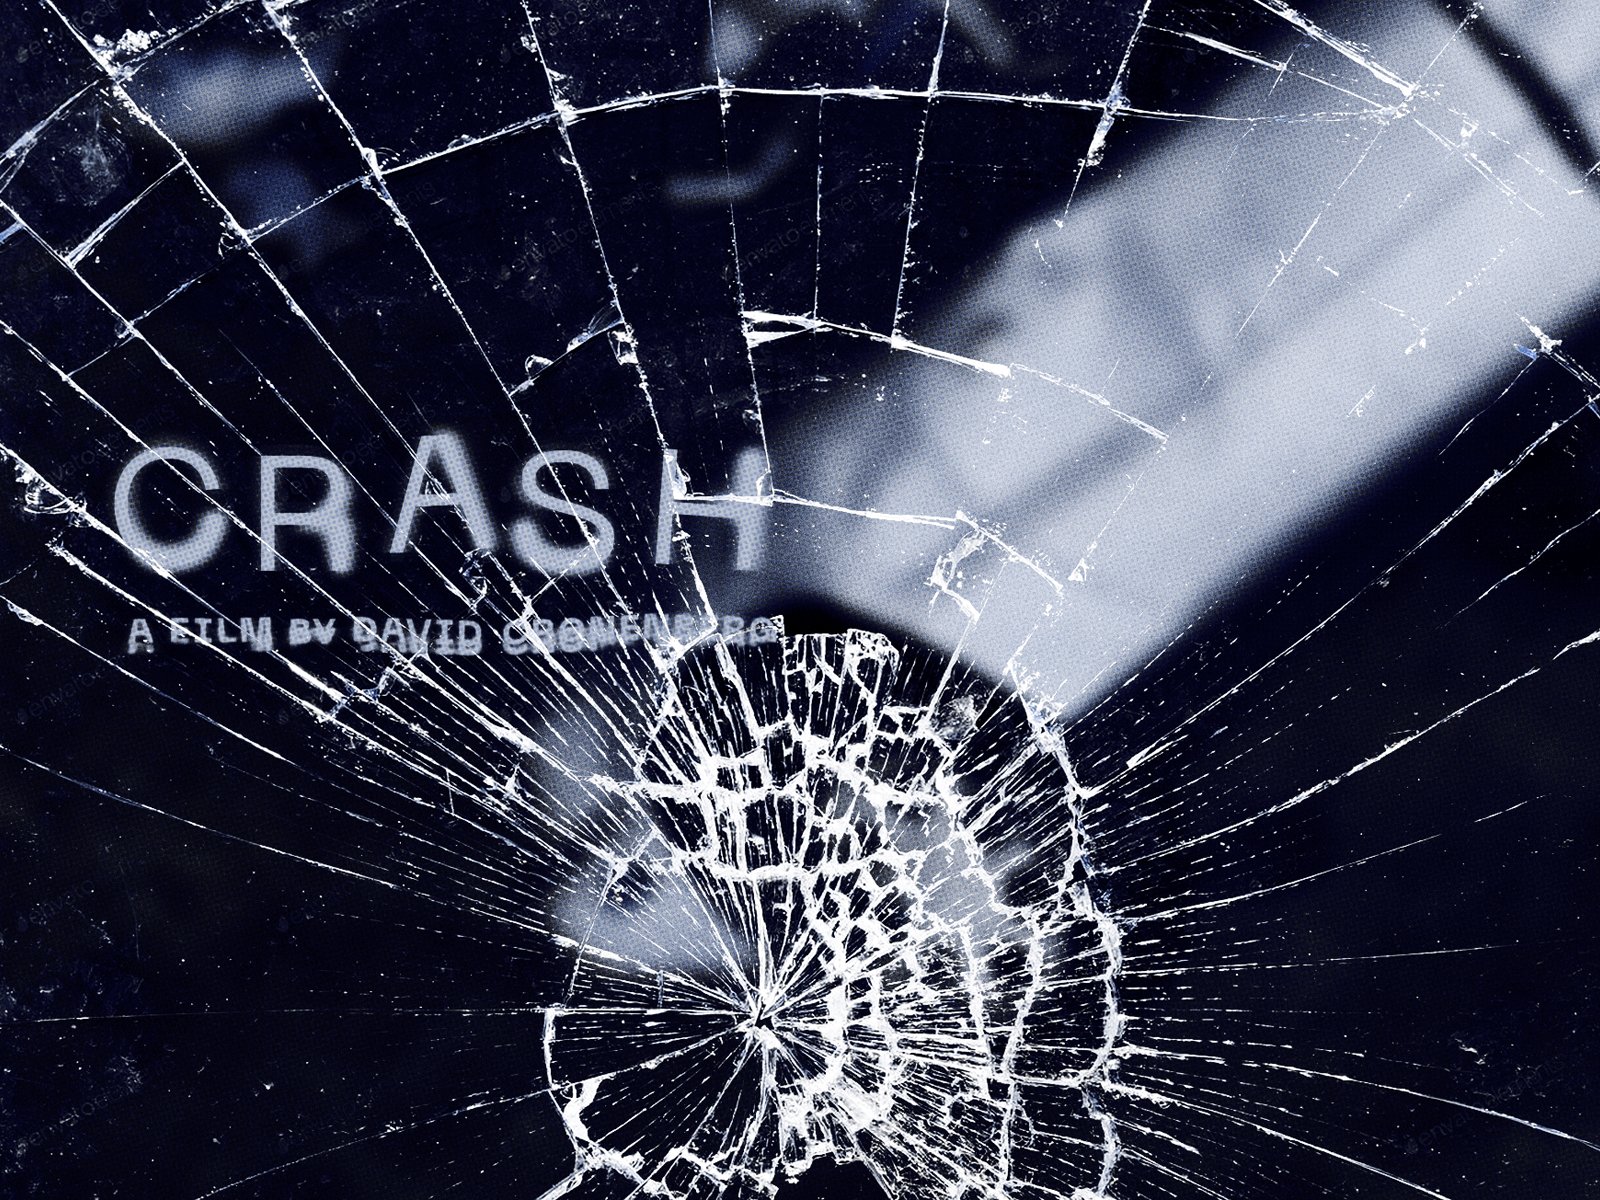 David Cronenberg's 'Crash'